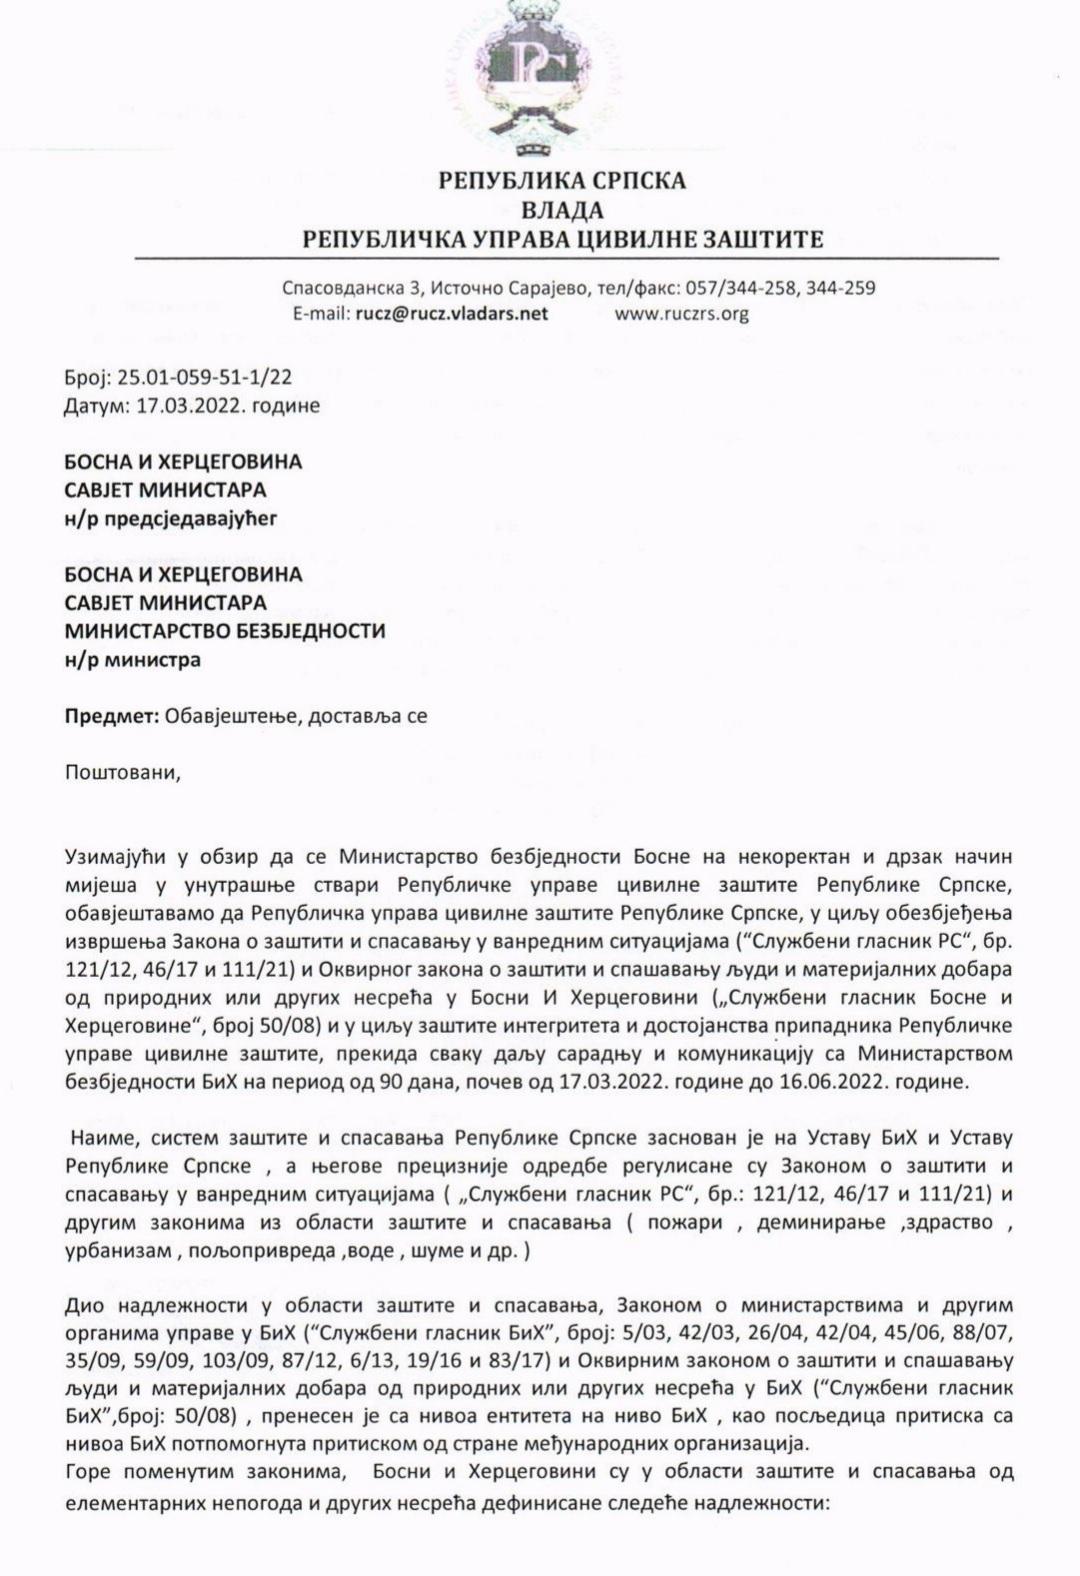 Dopis CZ RS upućen Ministarstvu sigurnosti BiH - Avaz